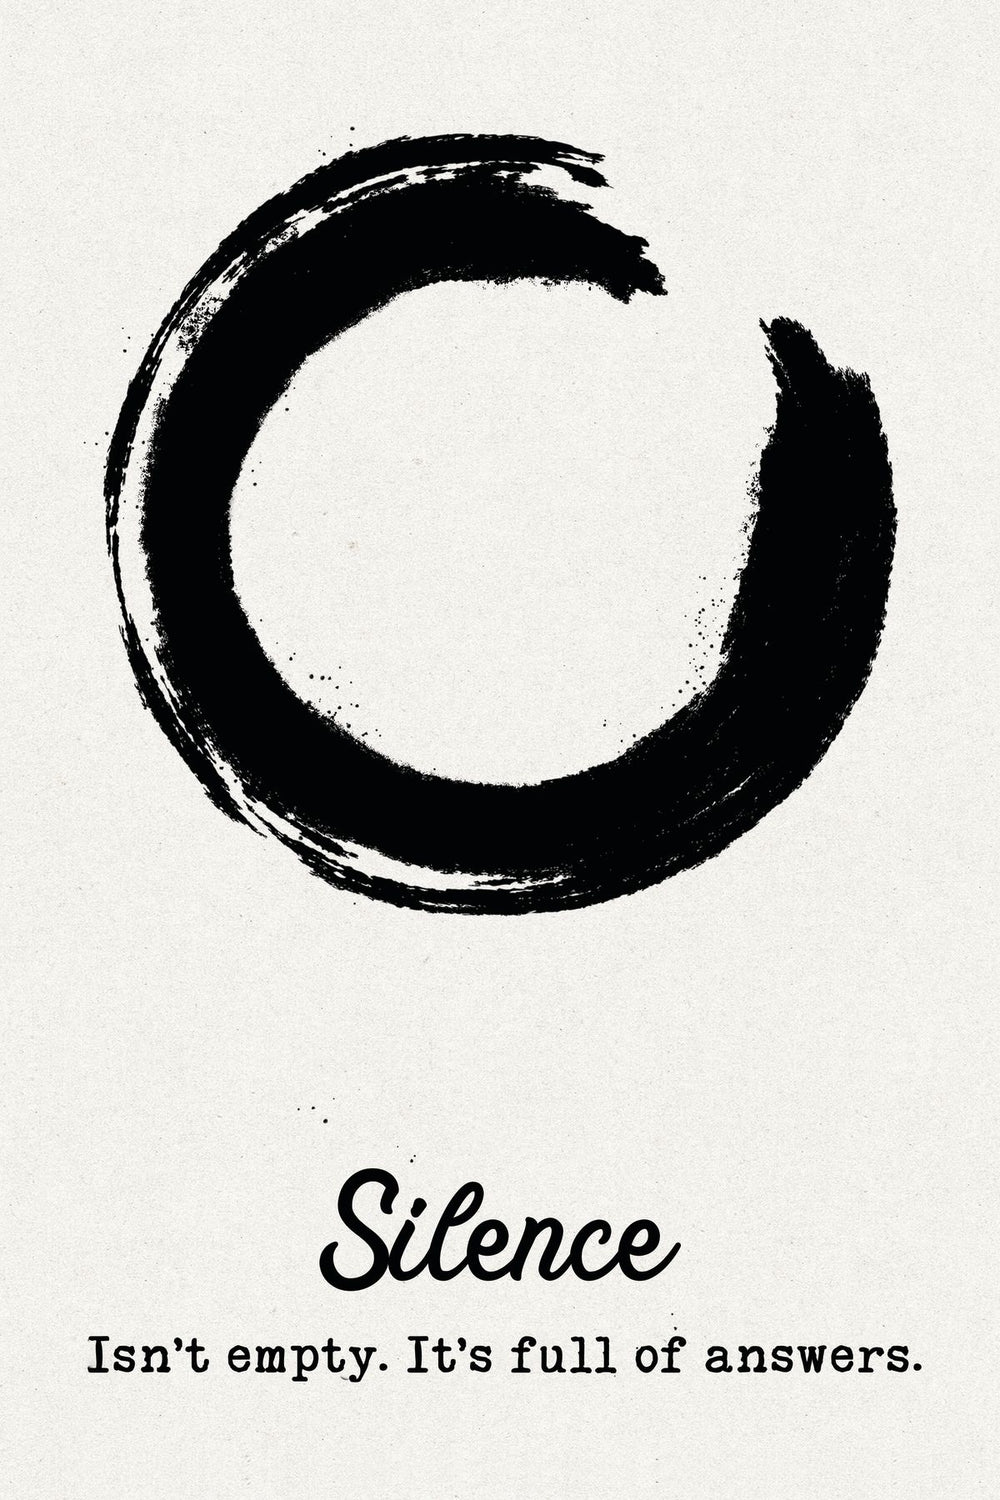 Zen Silence